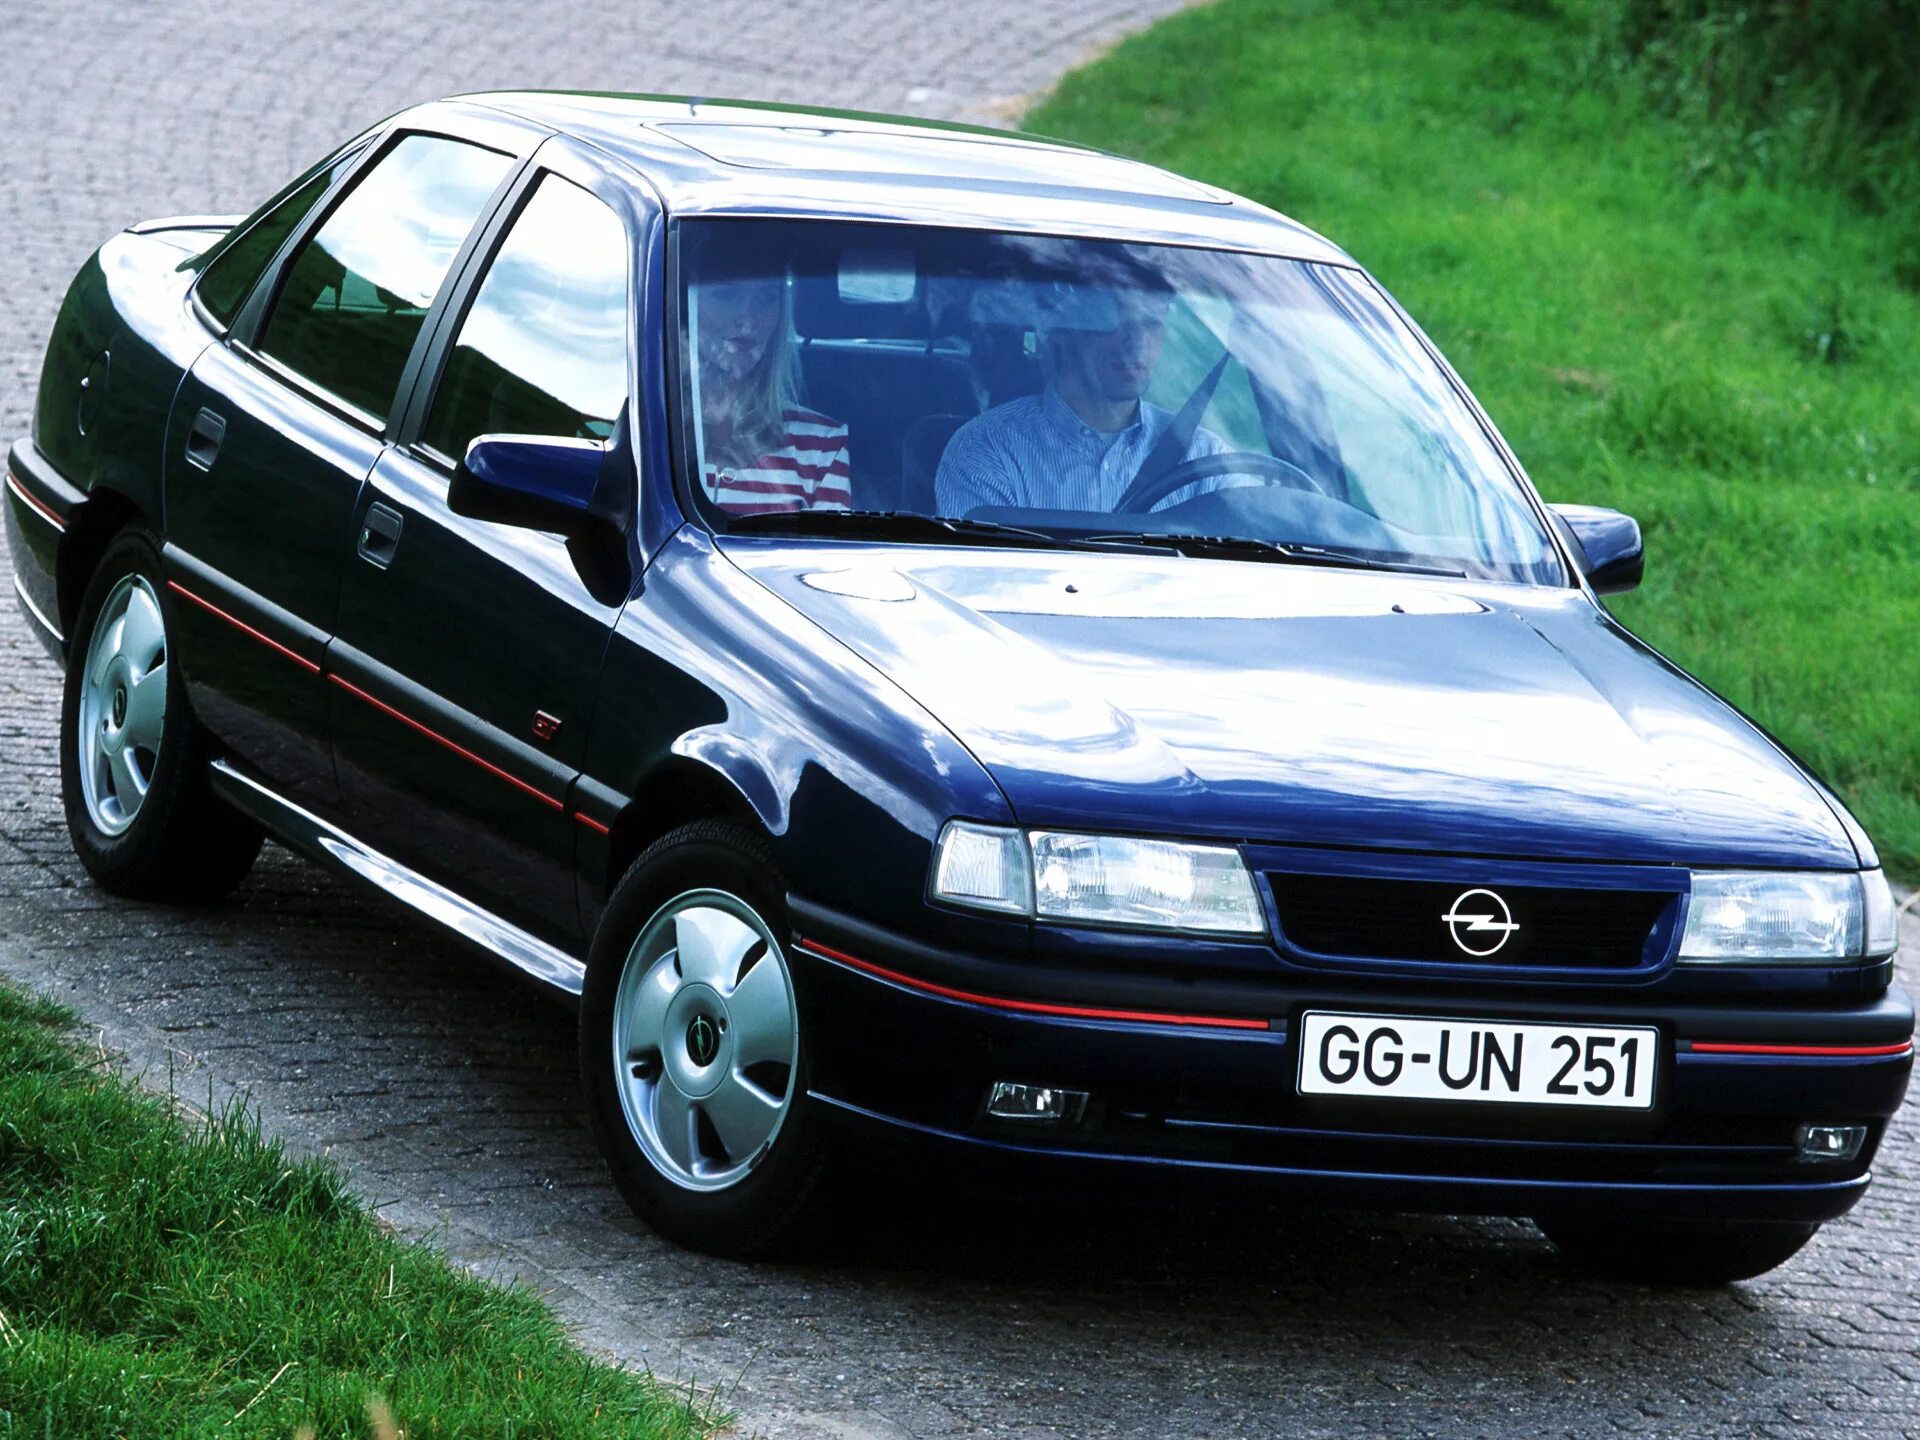 Opel Vectra 1992. Opel Vectra a gt 1995. Опель Вектра 1992. Опель Вектра 1995 седан.